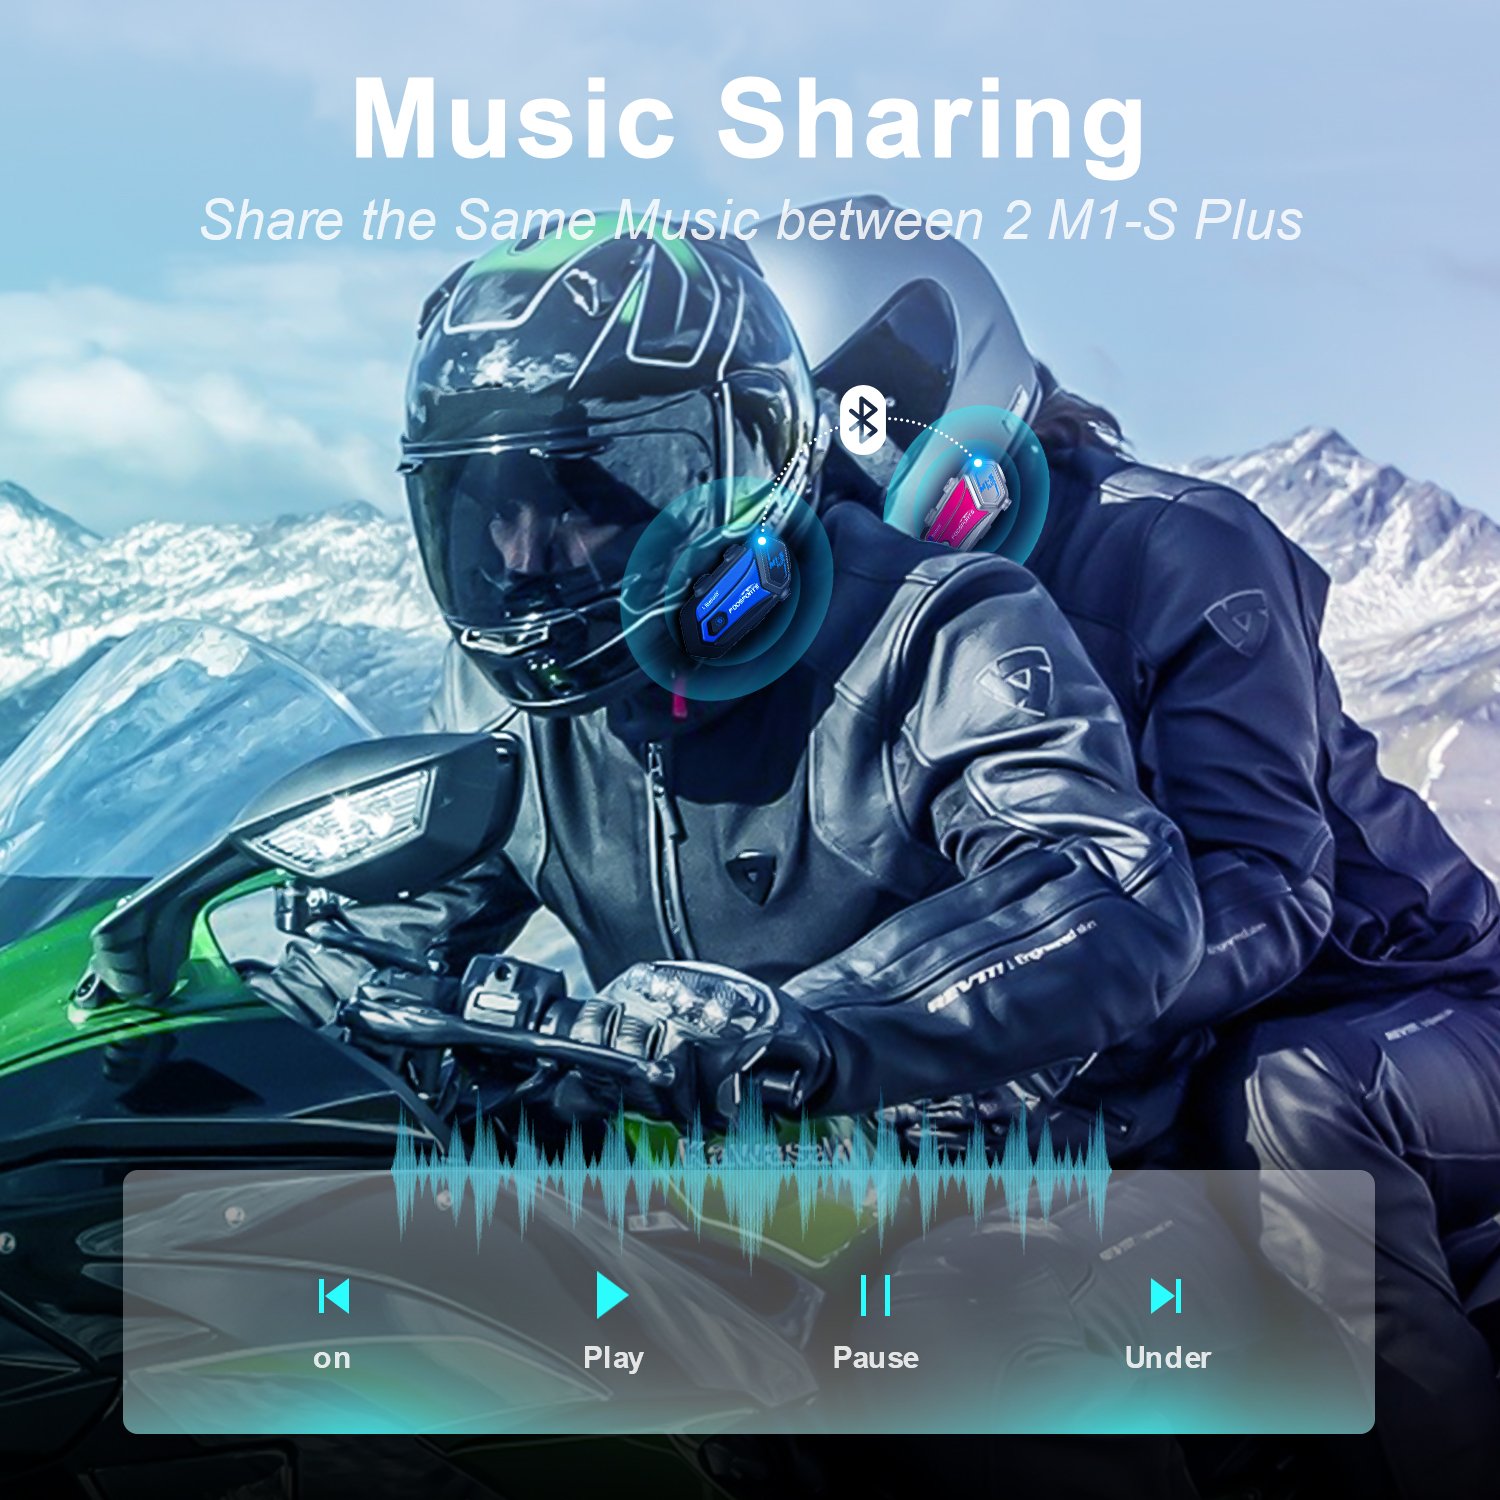 M1S PLUS Music Share Headset - Save $100 (32%) Off! | Fodsports